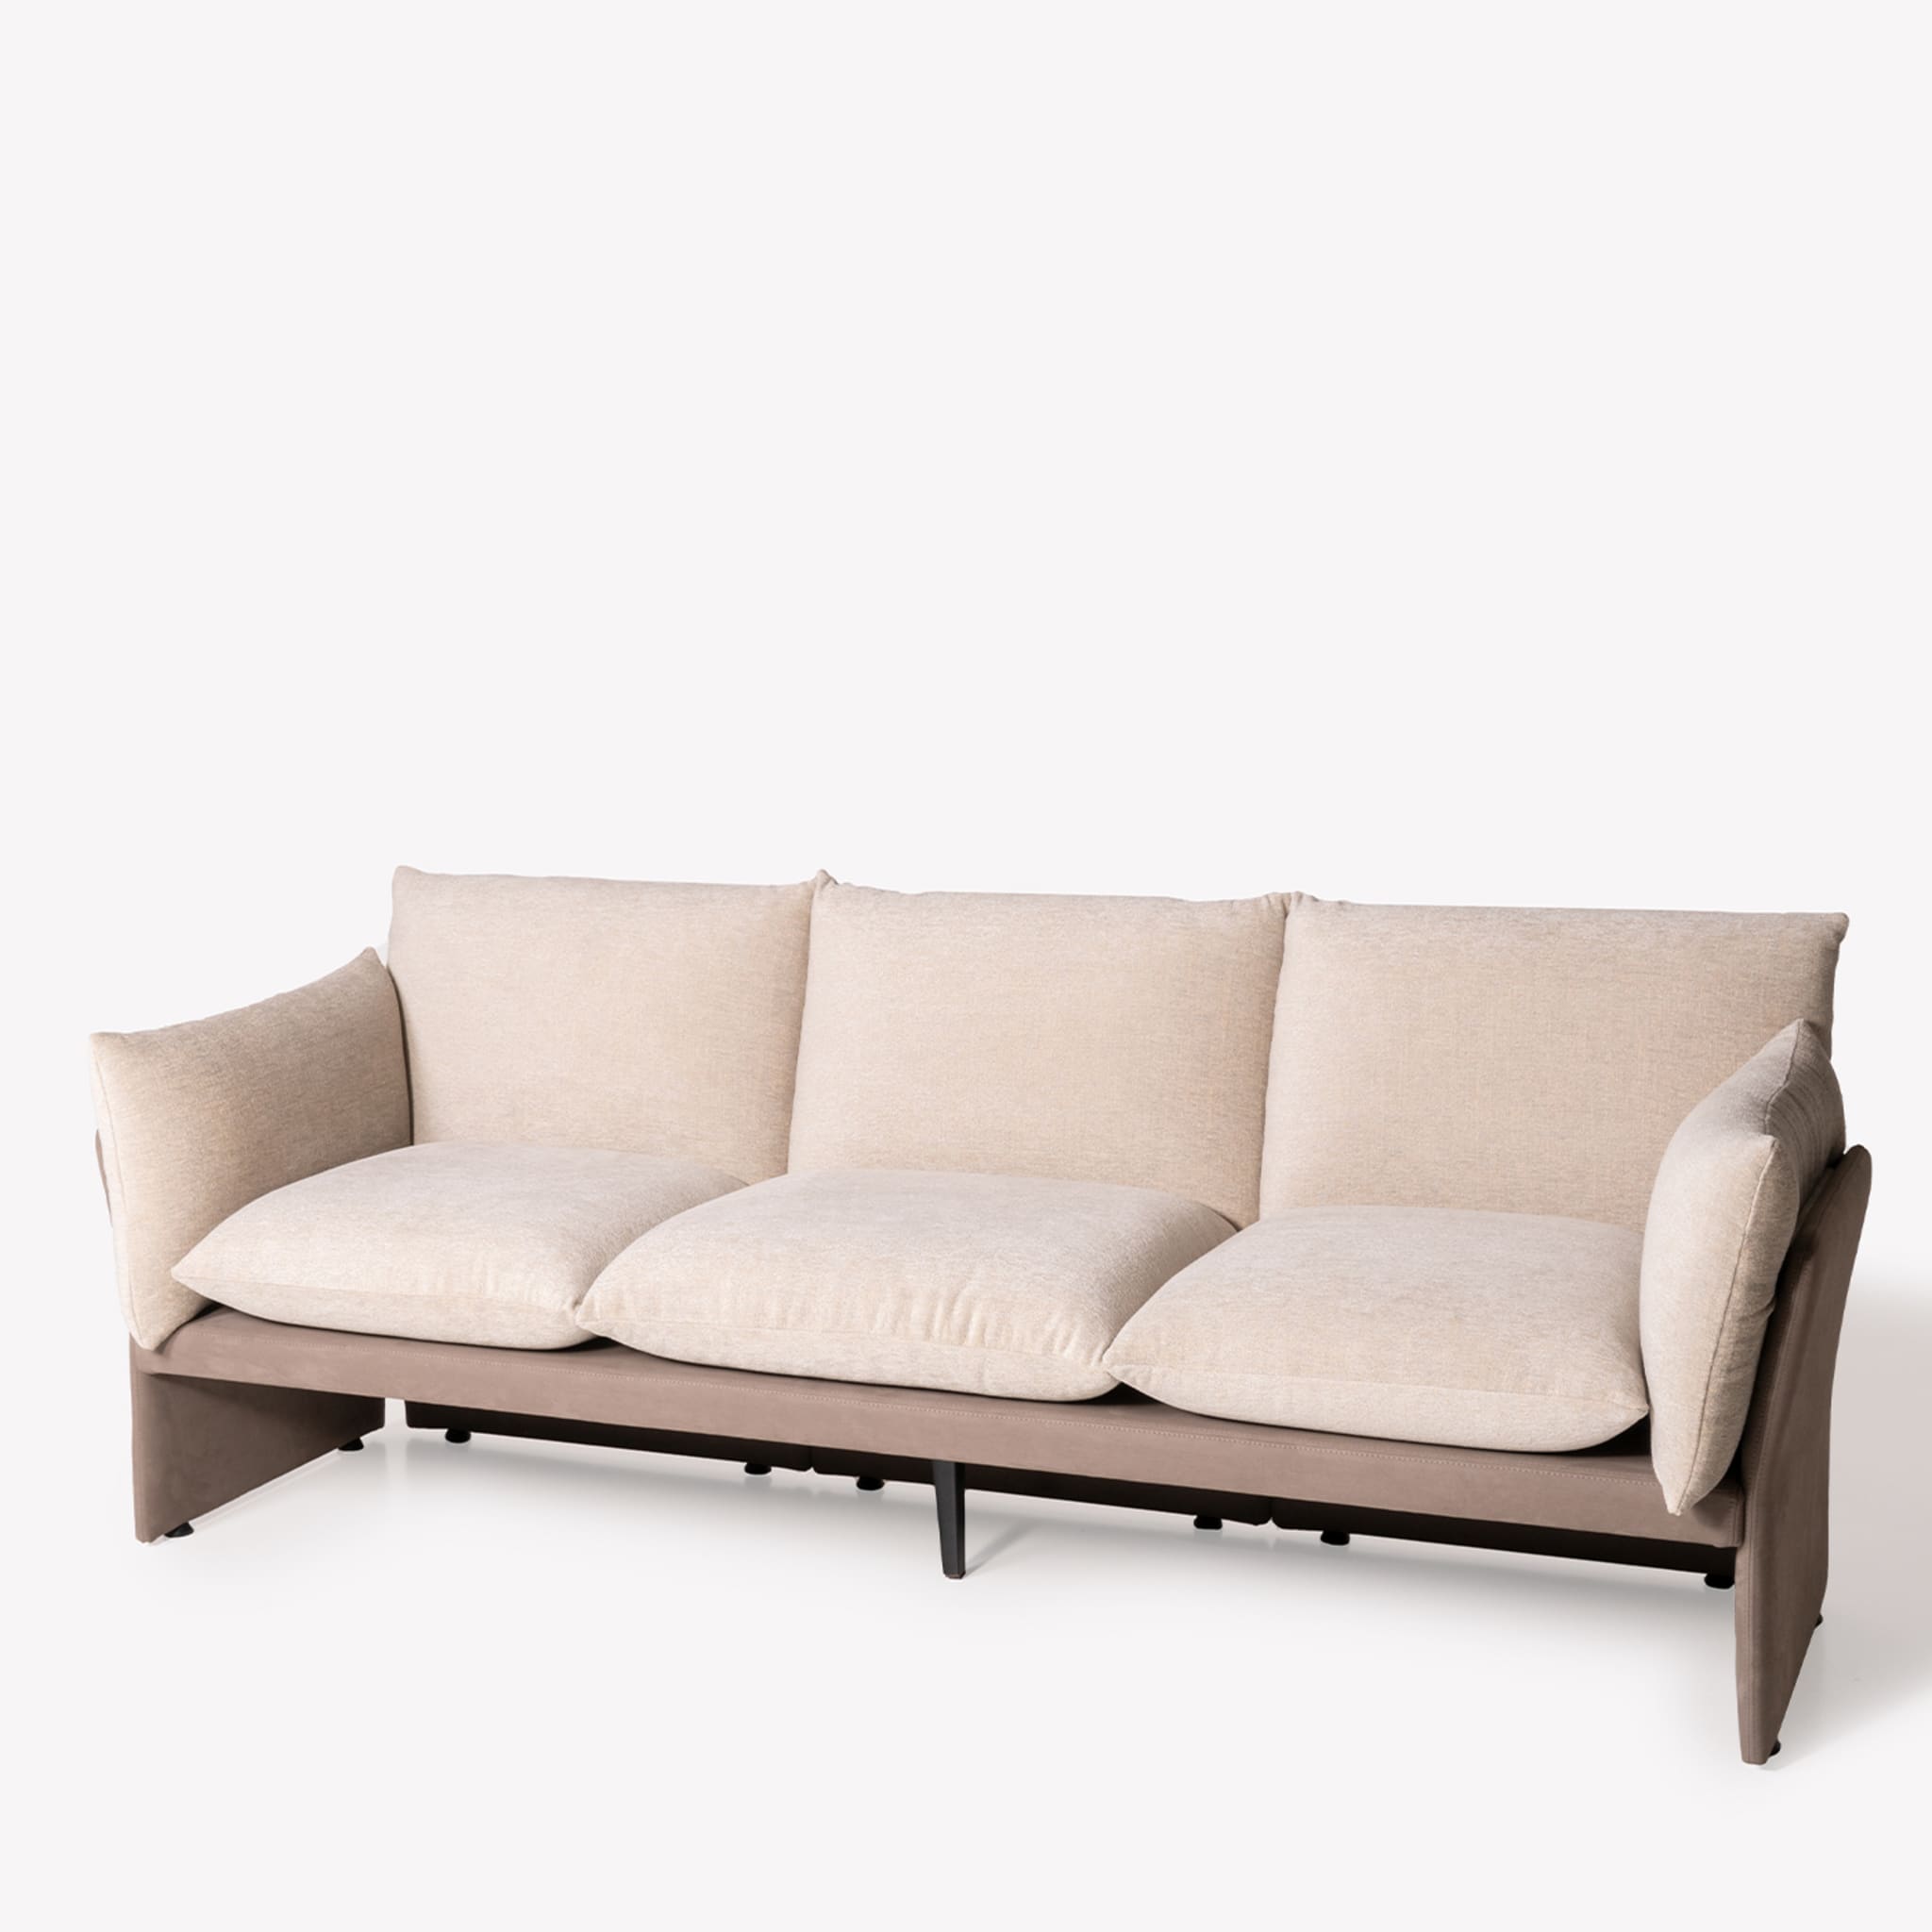 Farfalle 3-Seater Sofa By Marco And Giulio Mantellassi - Alternative view 1